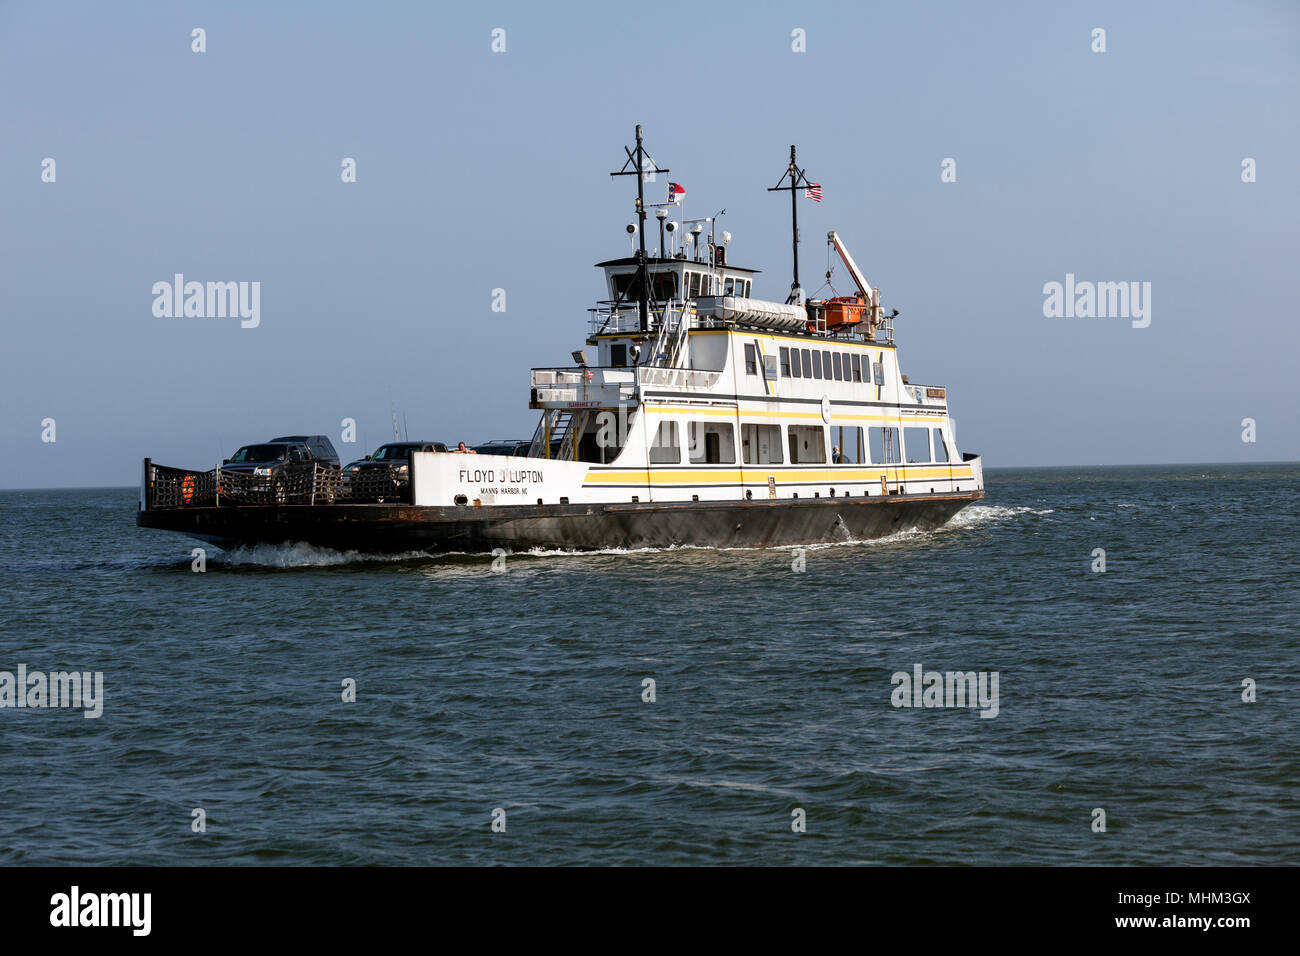 NC01556-00...NORTH CAROLINA - North Carolina Marine Highway ferry boat Floyd J Lupton making the run between Hatteras Island and Ocracoke Island. Stock Photo